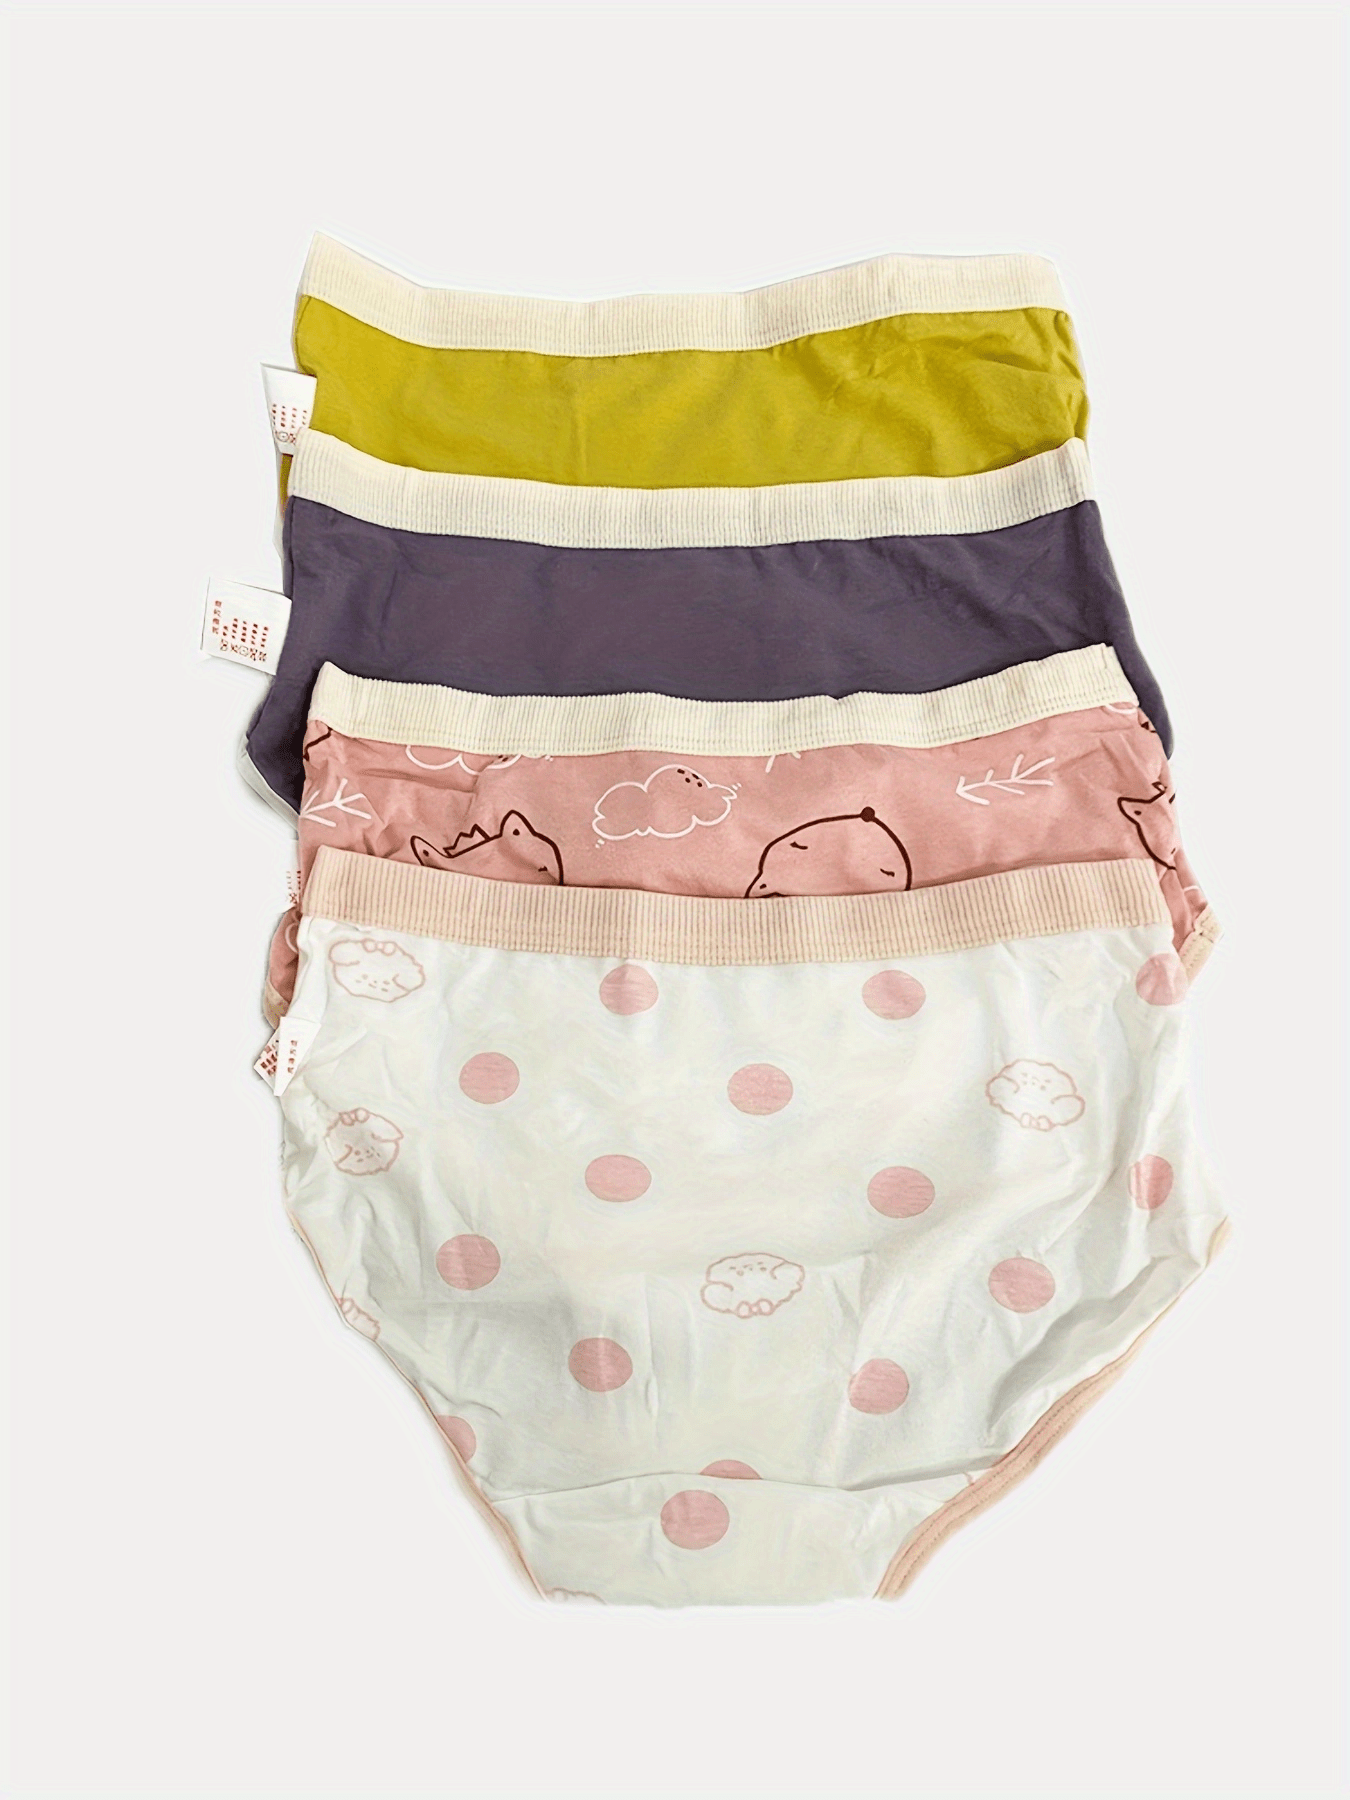 5 Pcs/lot Children's Underwear Small Dot Triangle Cotton Underwear